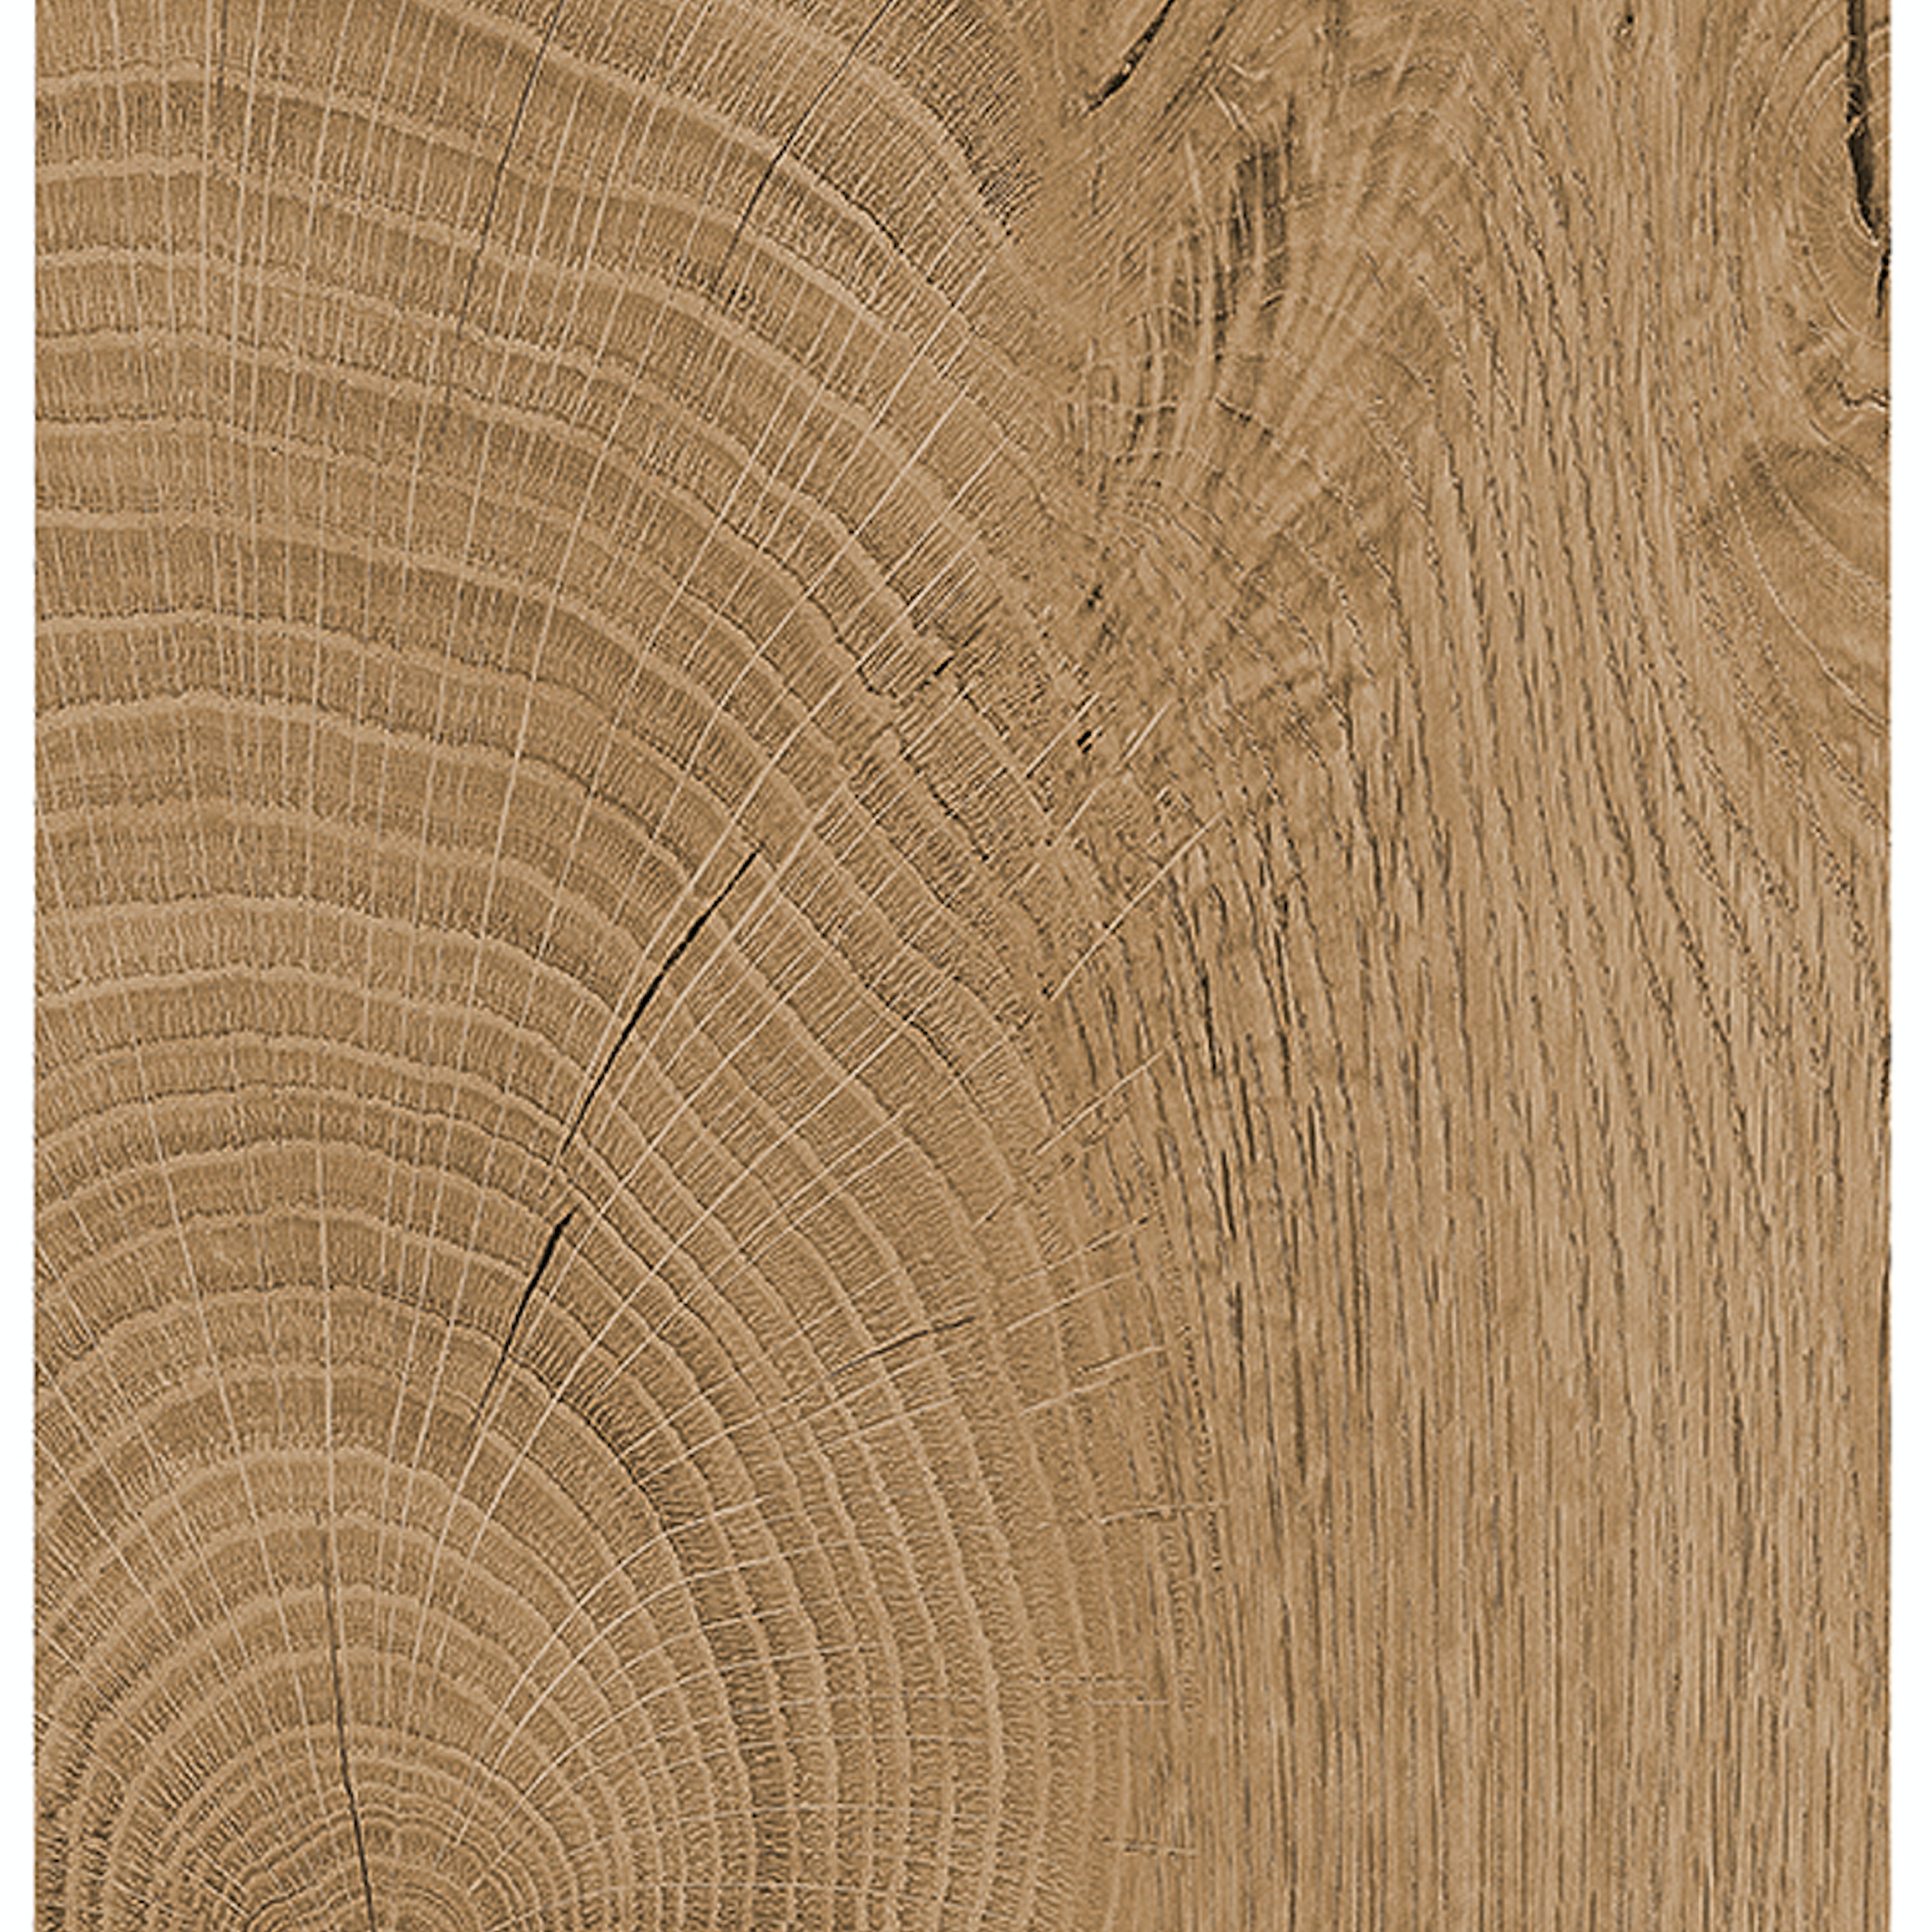 Kunststof hout decor keukenfront (590 Eiken endgrain natuur)